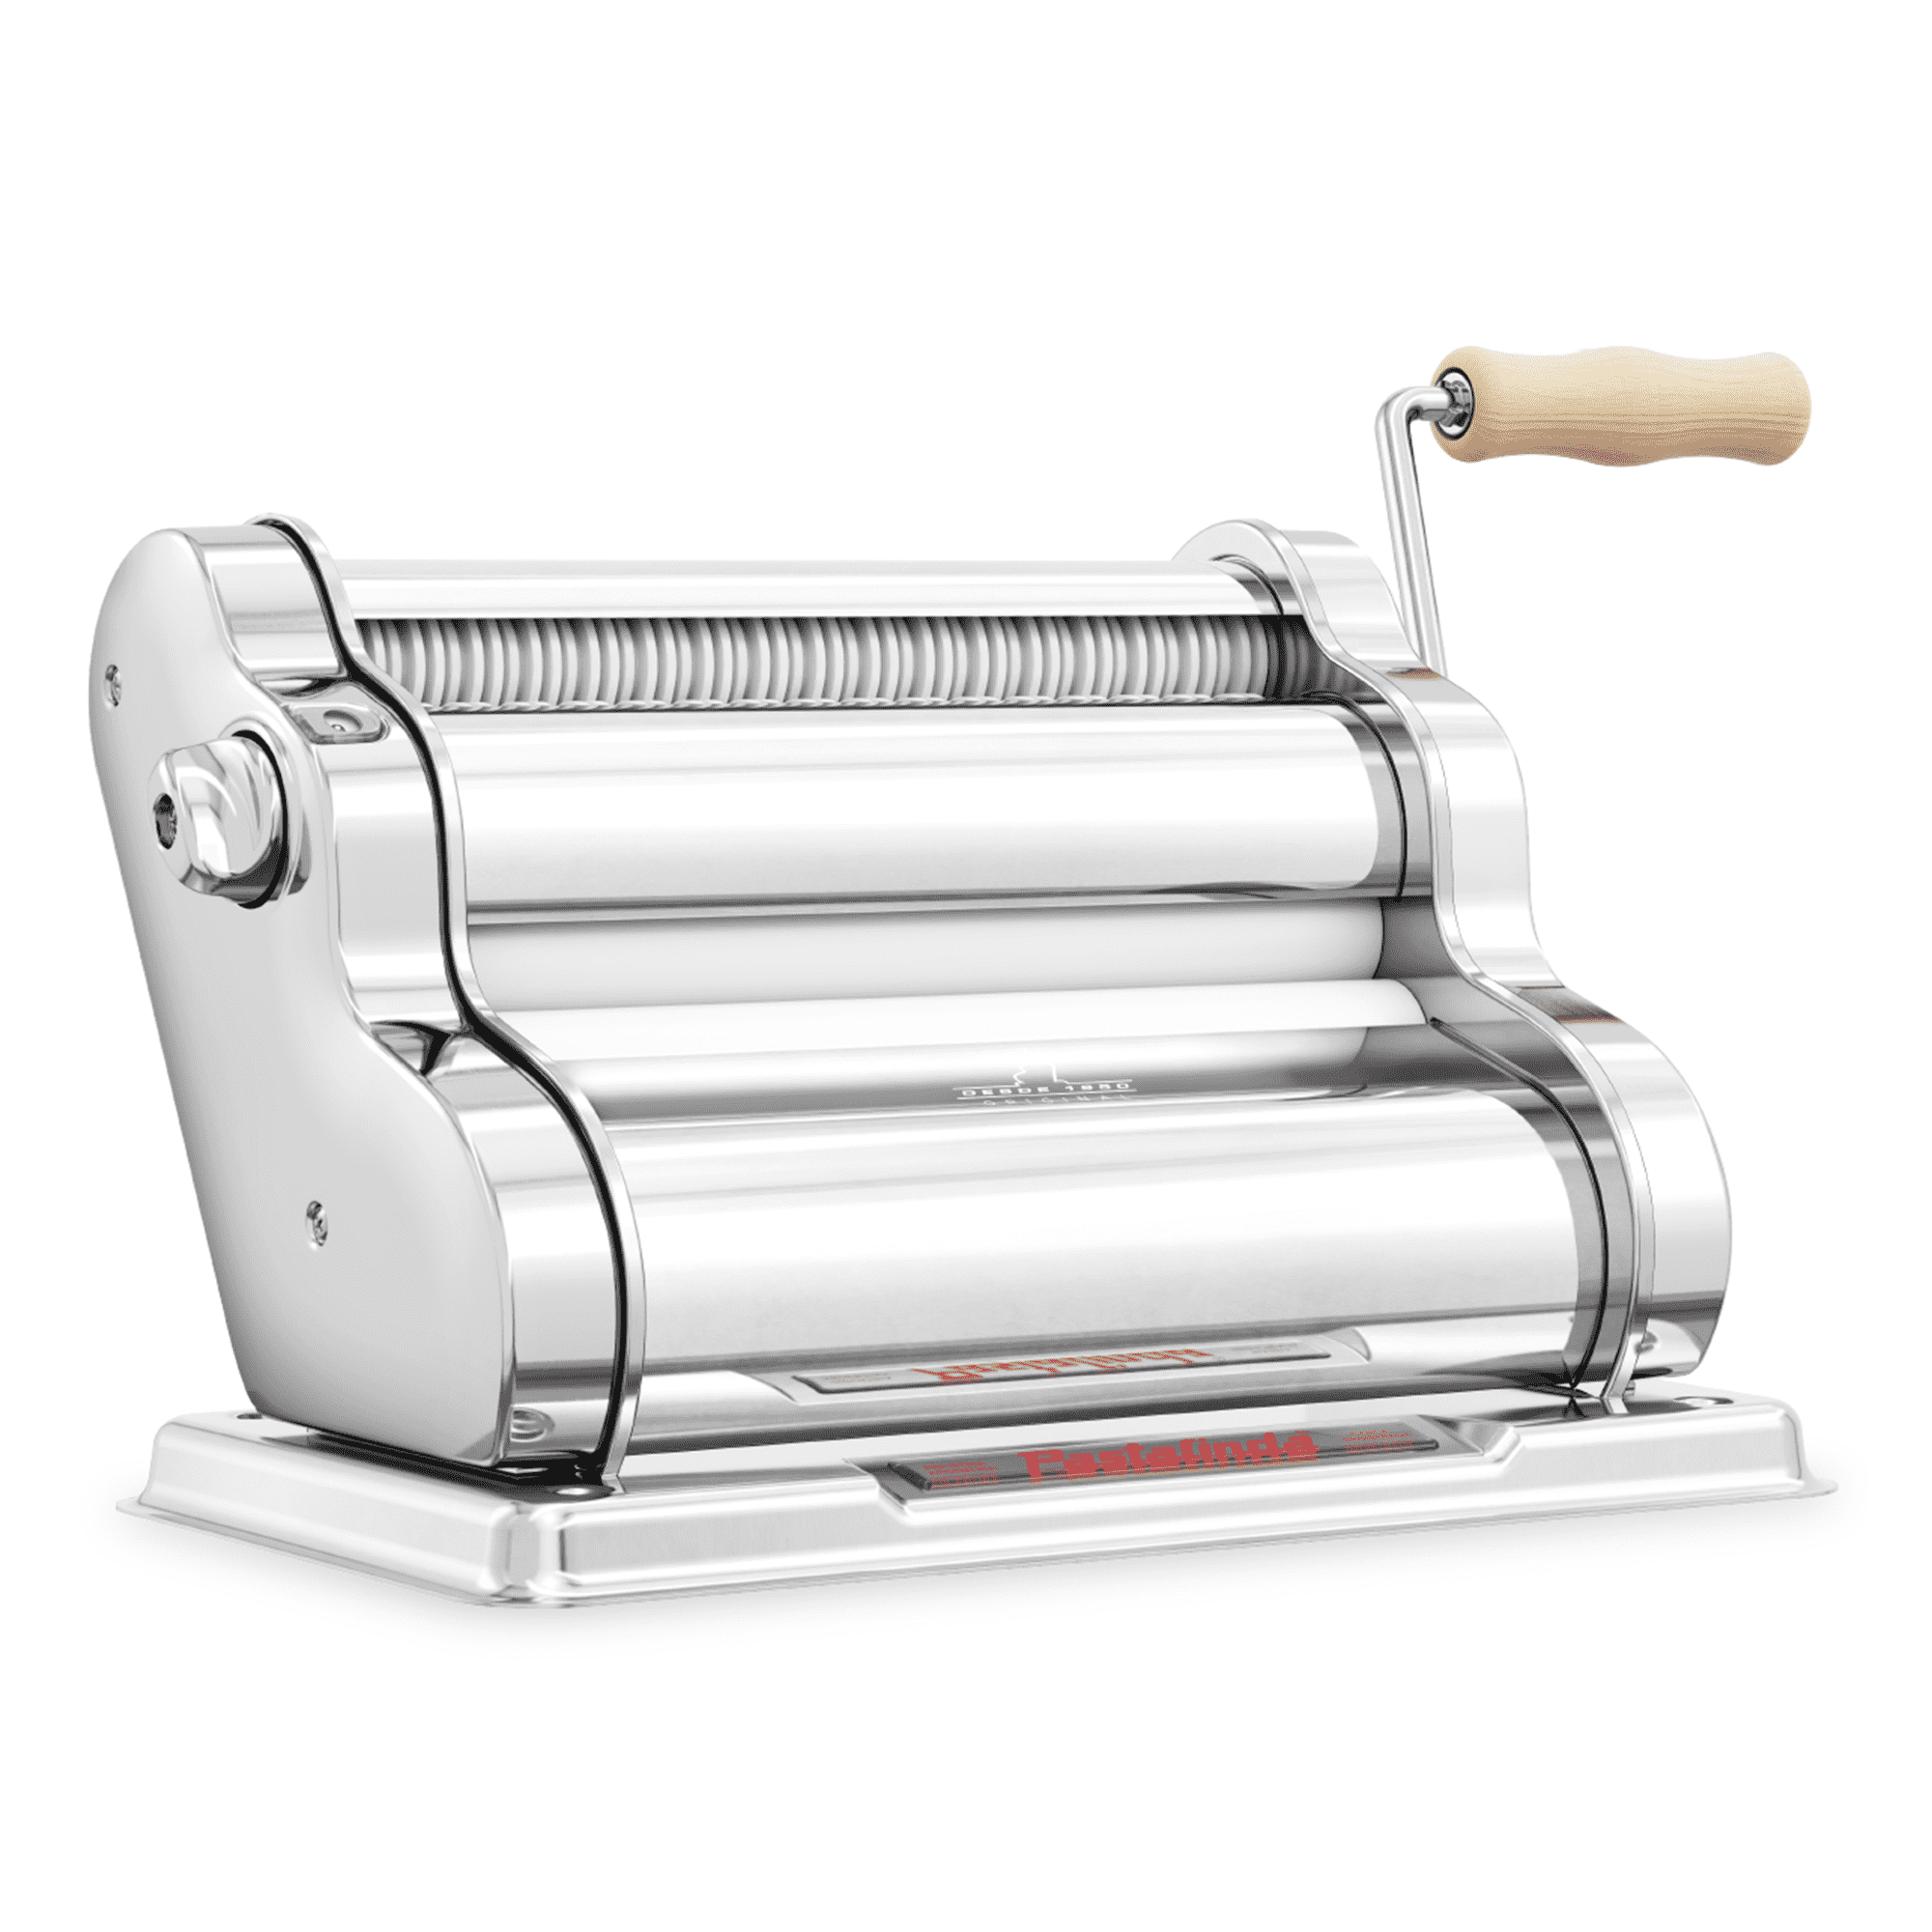 Pasta machine, chromed steel